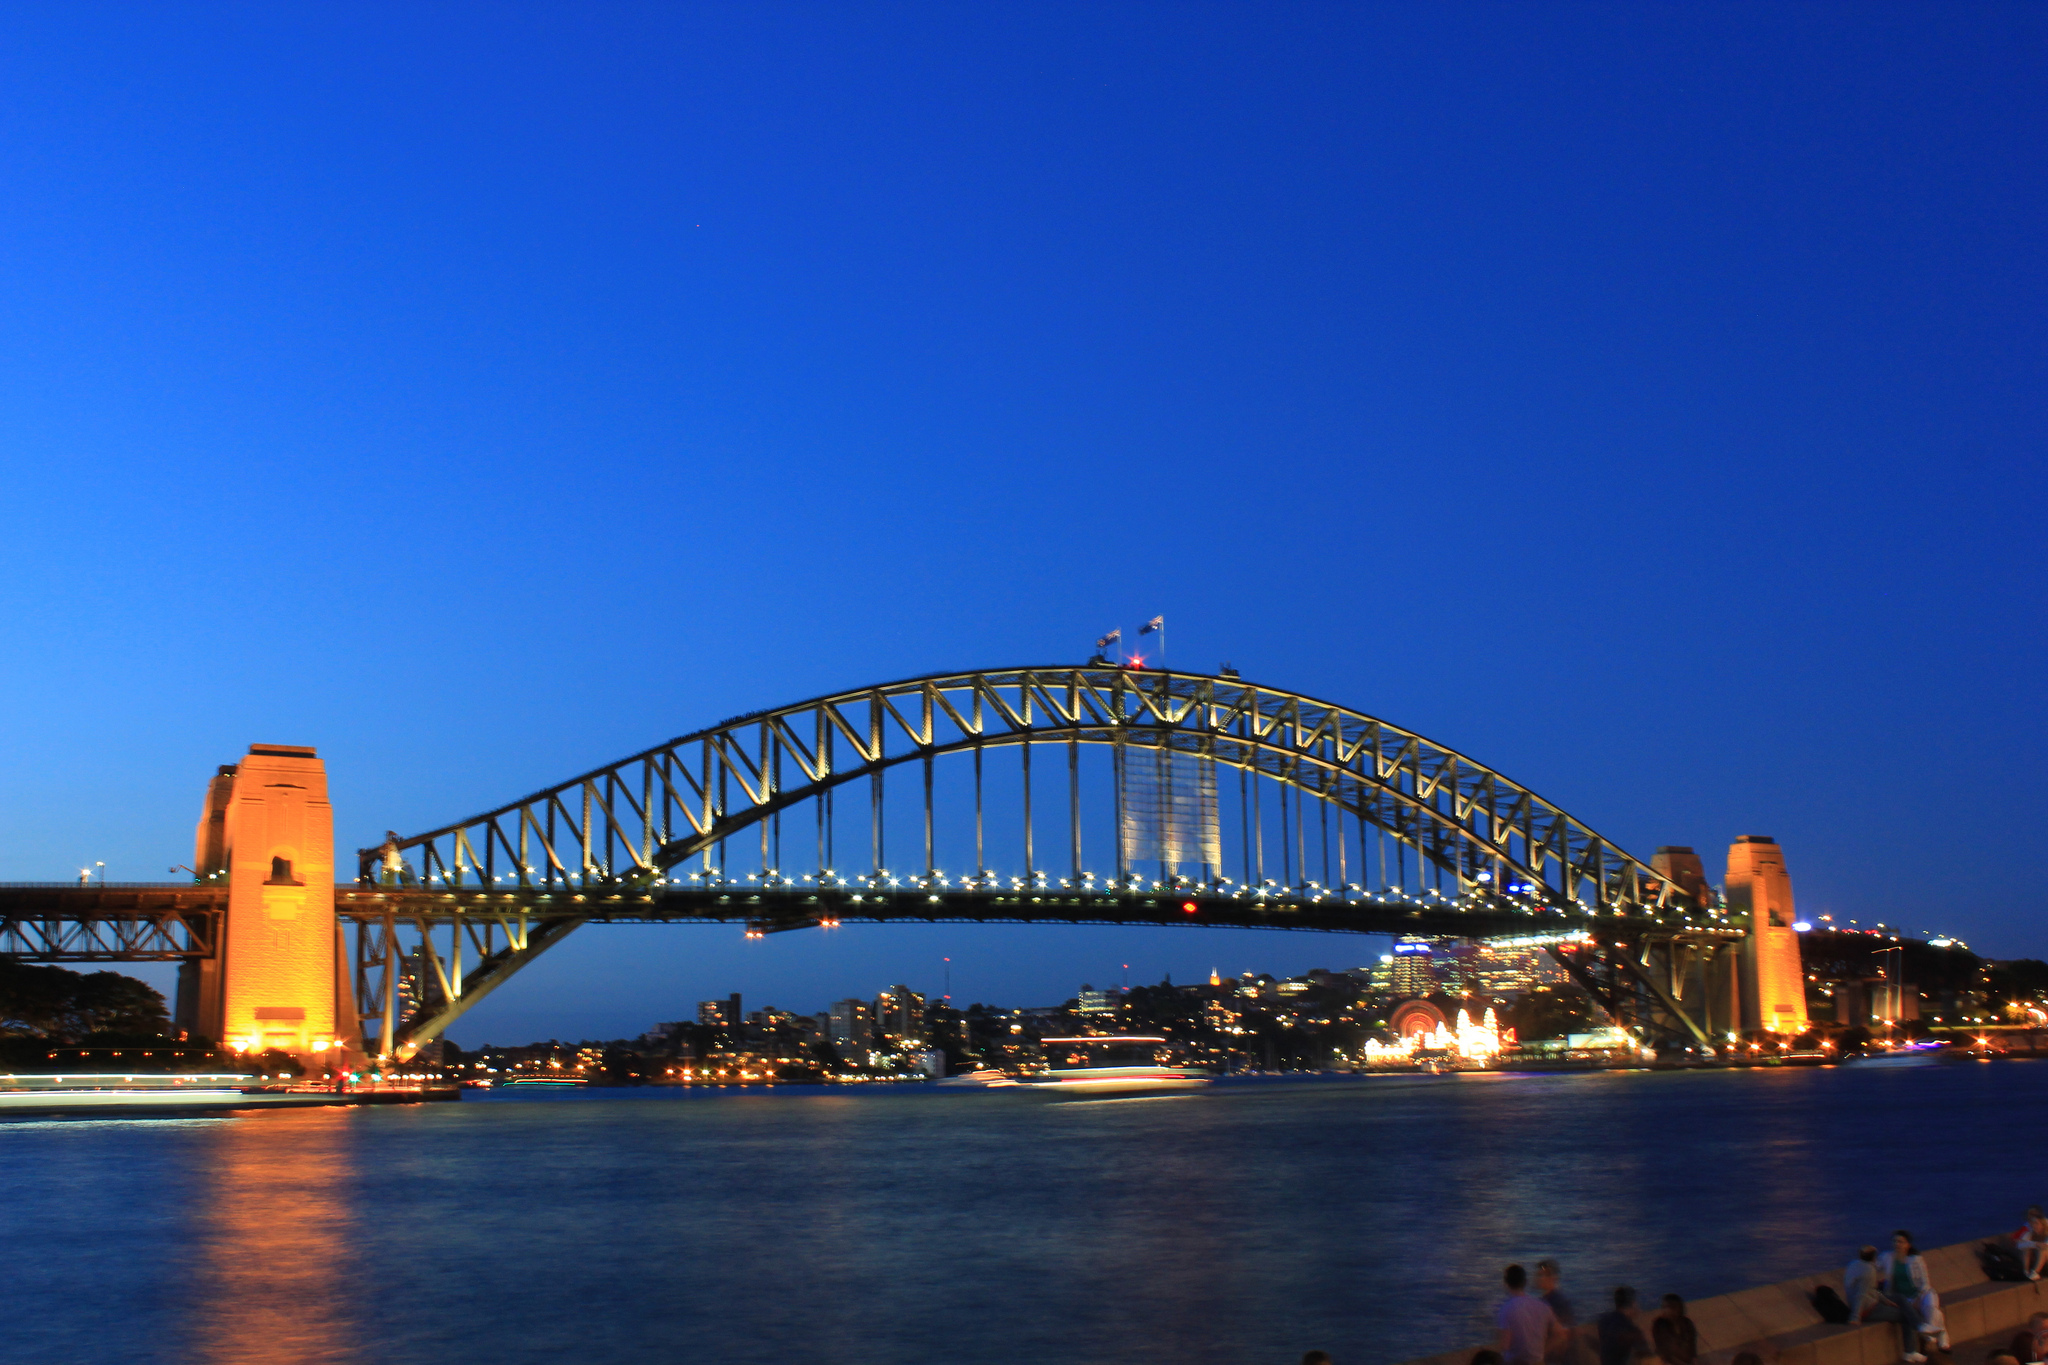 Harbour bridge. Харбор-бридж Сидней. Сиднейский мост Харбор-бридж. Мост Харбор бридж в Австралии. Сиднейский арочный мост Харбор-бридж..